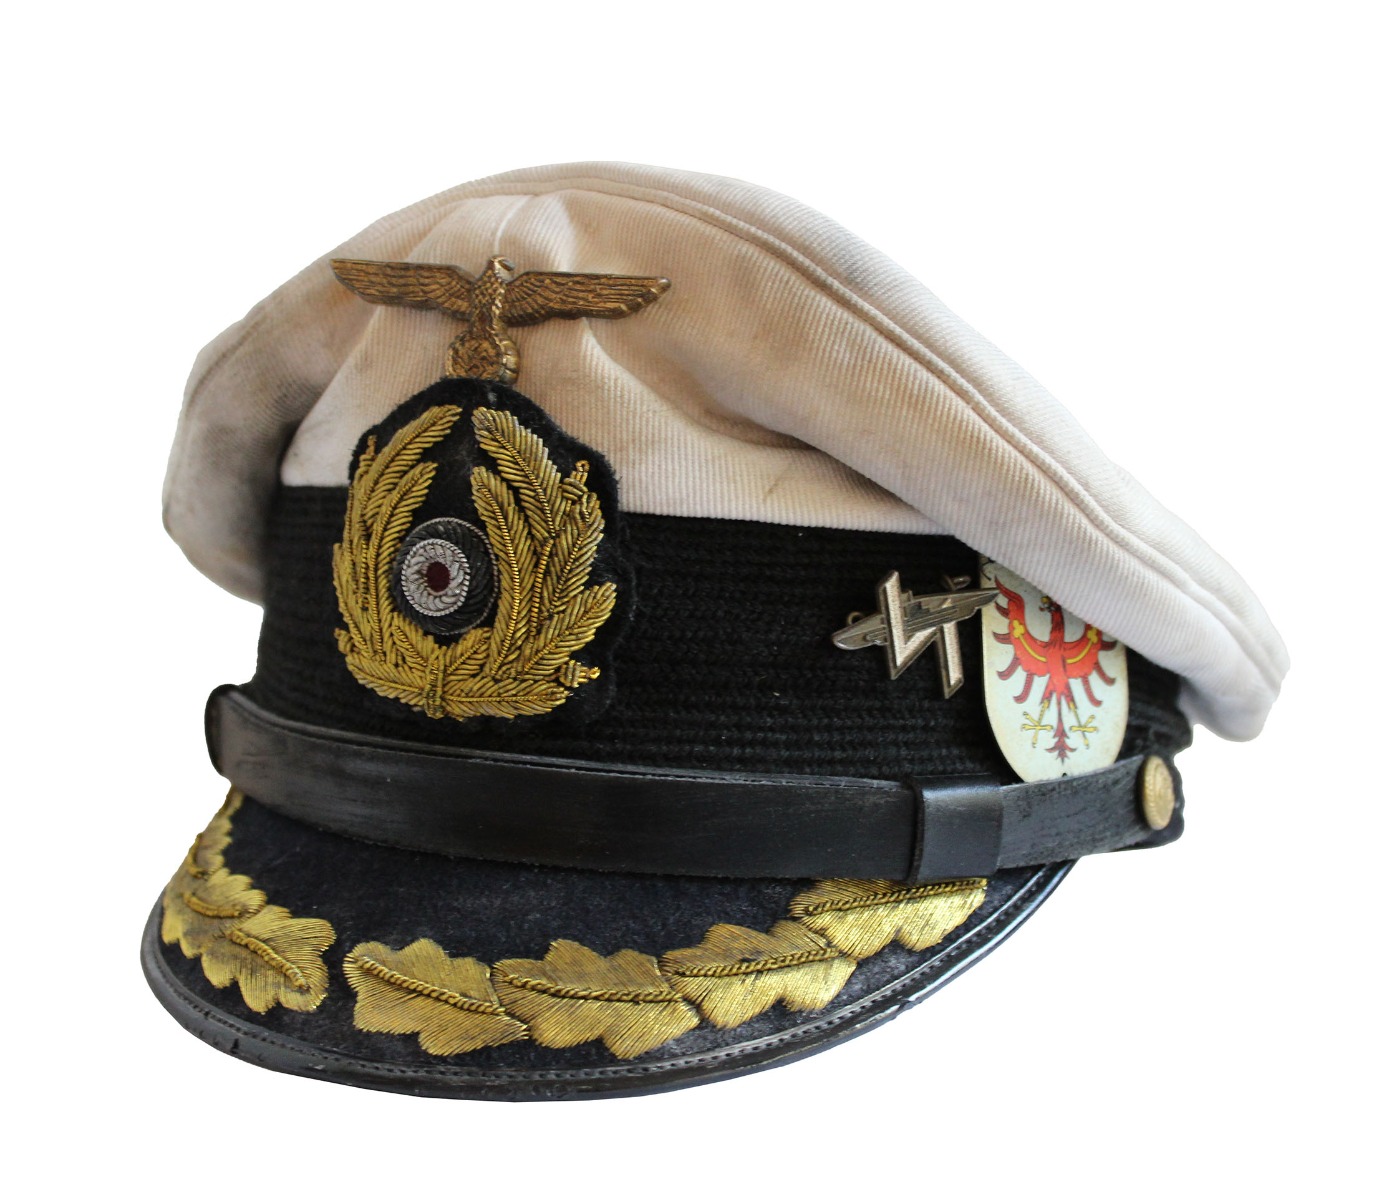 KRIEGSMARINE U-BOAT CAPTAIN'S AGED VISOR CAP WITH INSIGNIA - KORVETTENKAPITANS